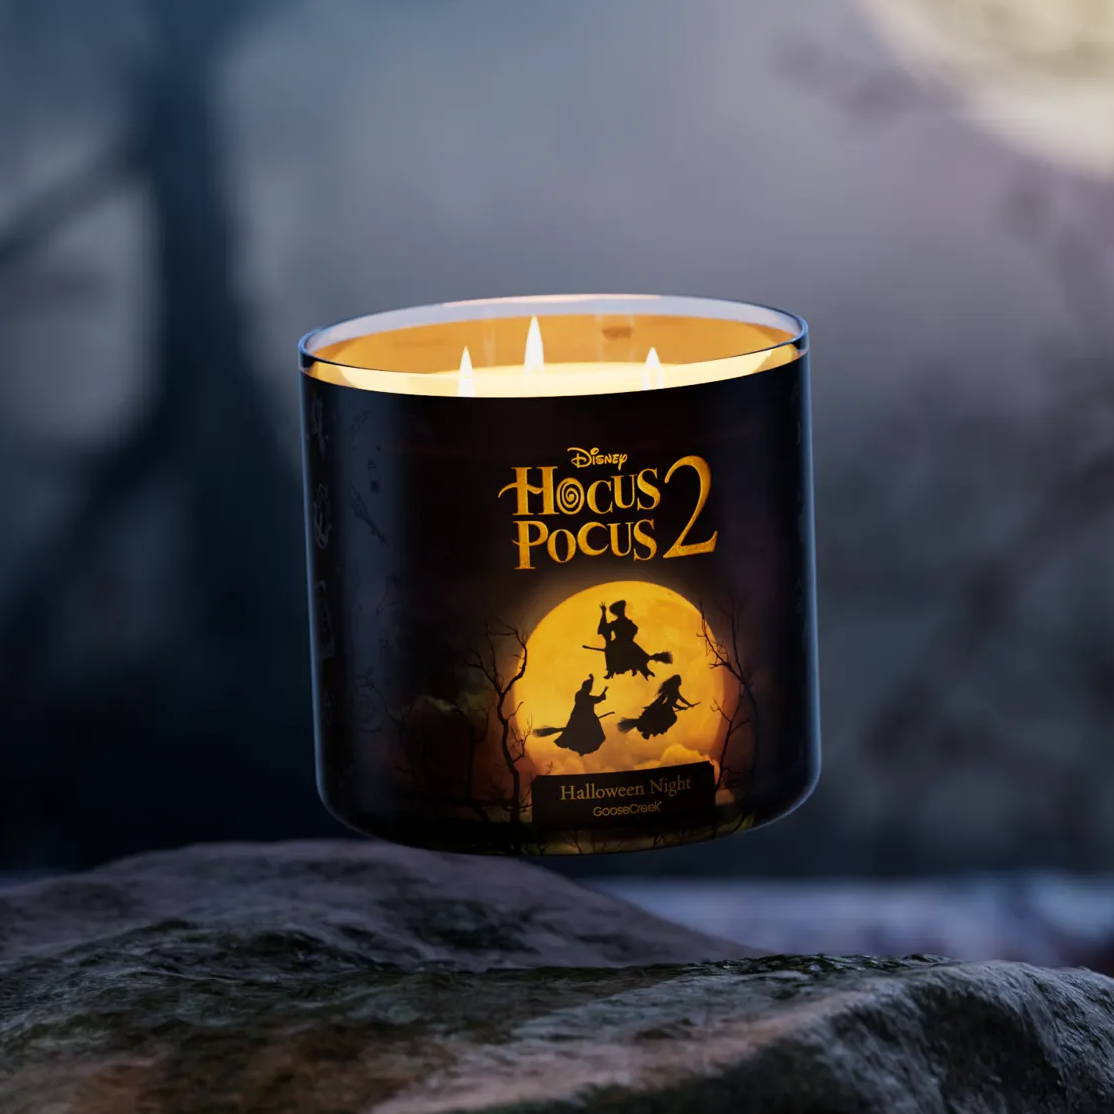 Hocus-Pocus-2-Candle-Halloween-Night